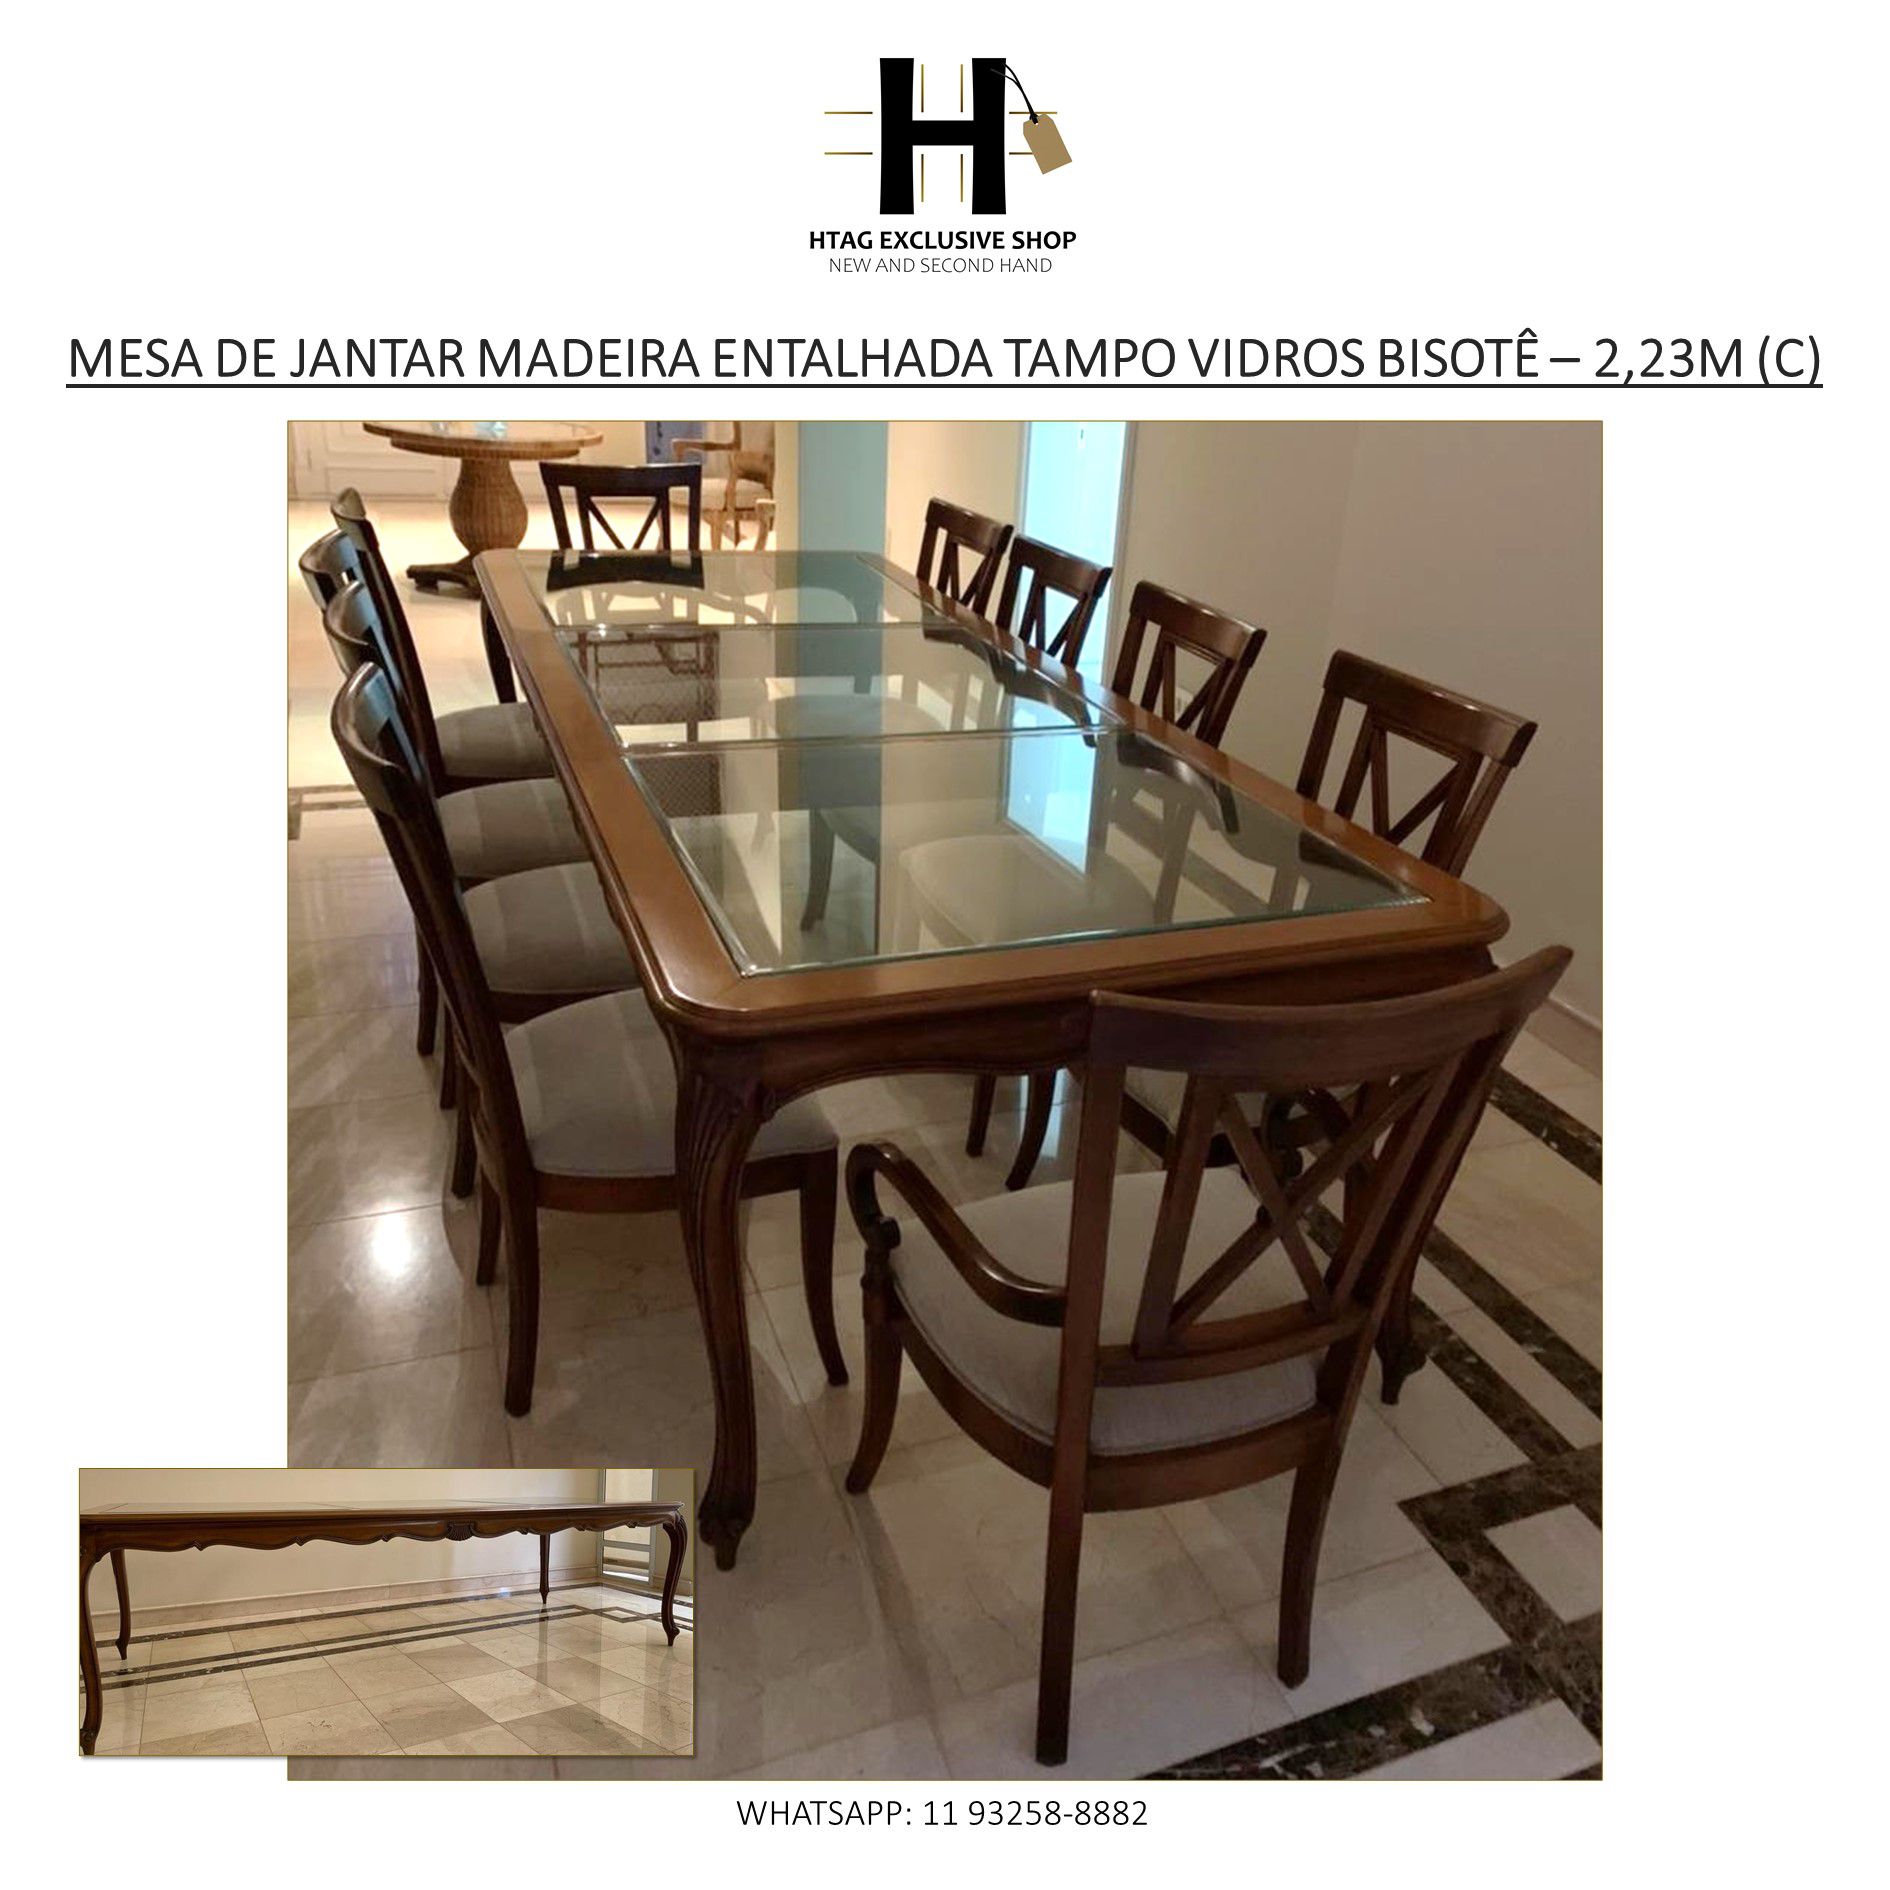 mesa de jantar, móveis luxo, design, decoração, htag exclusive shop, m -  HTAG EXCLUSIVE SHOP - New & Second Hand